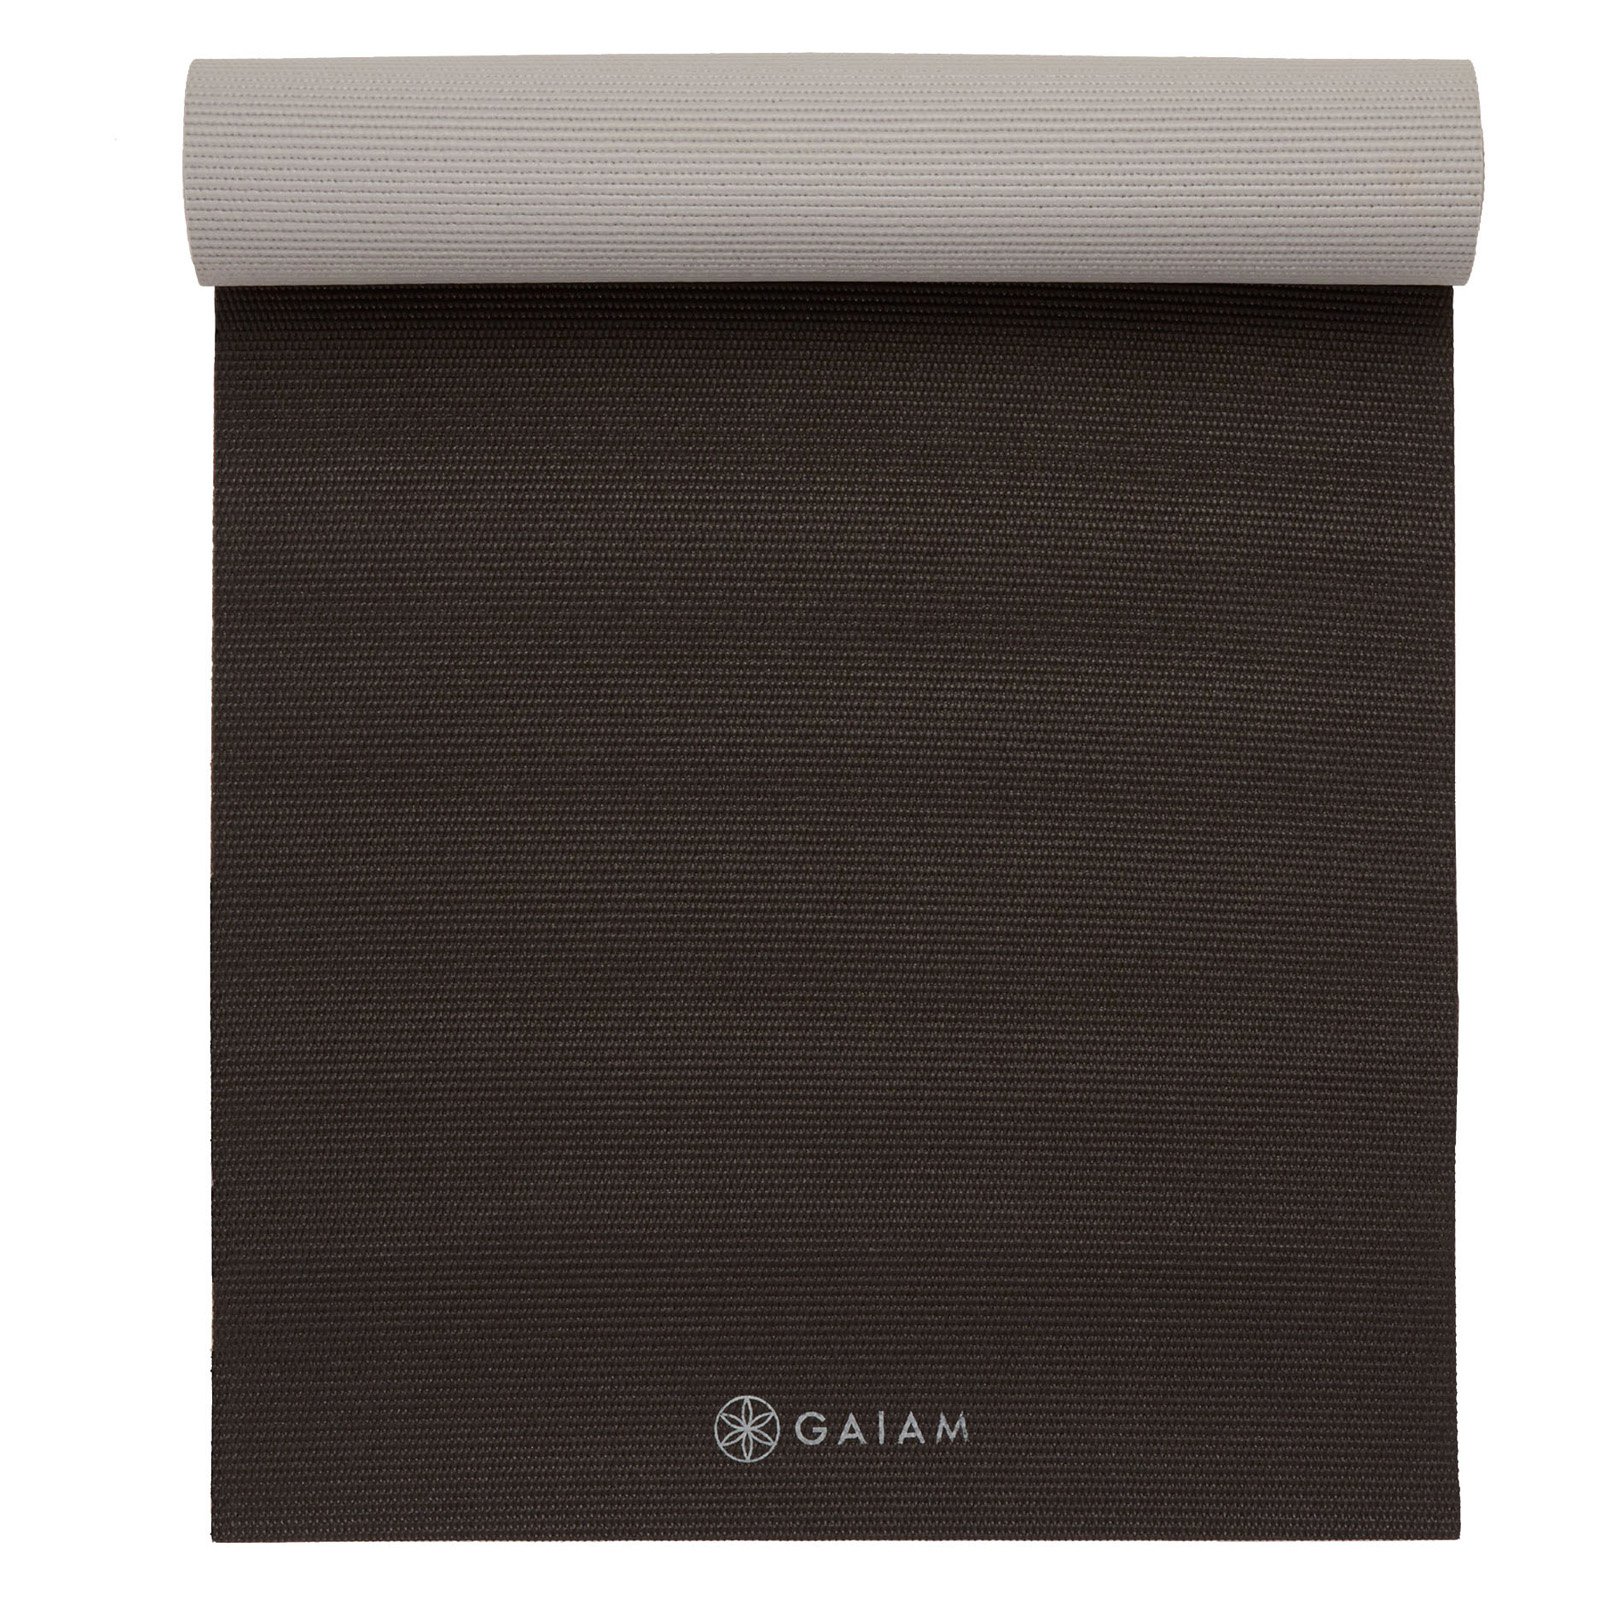 Gaiam Premium 2-Color Yoga Mat, Granite Storm, 5mm - image 1 of 7